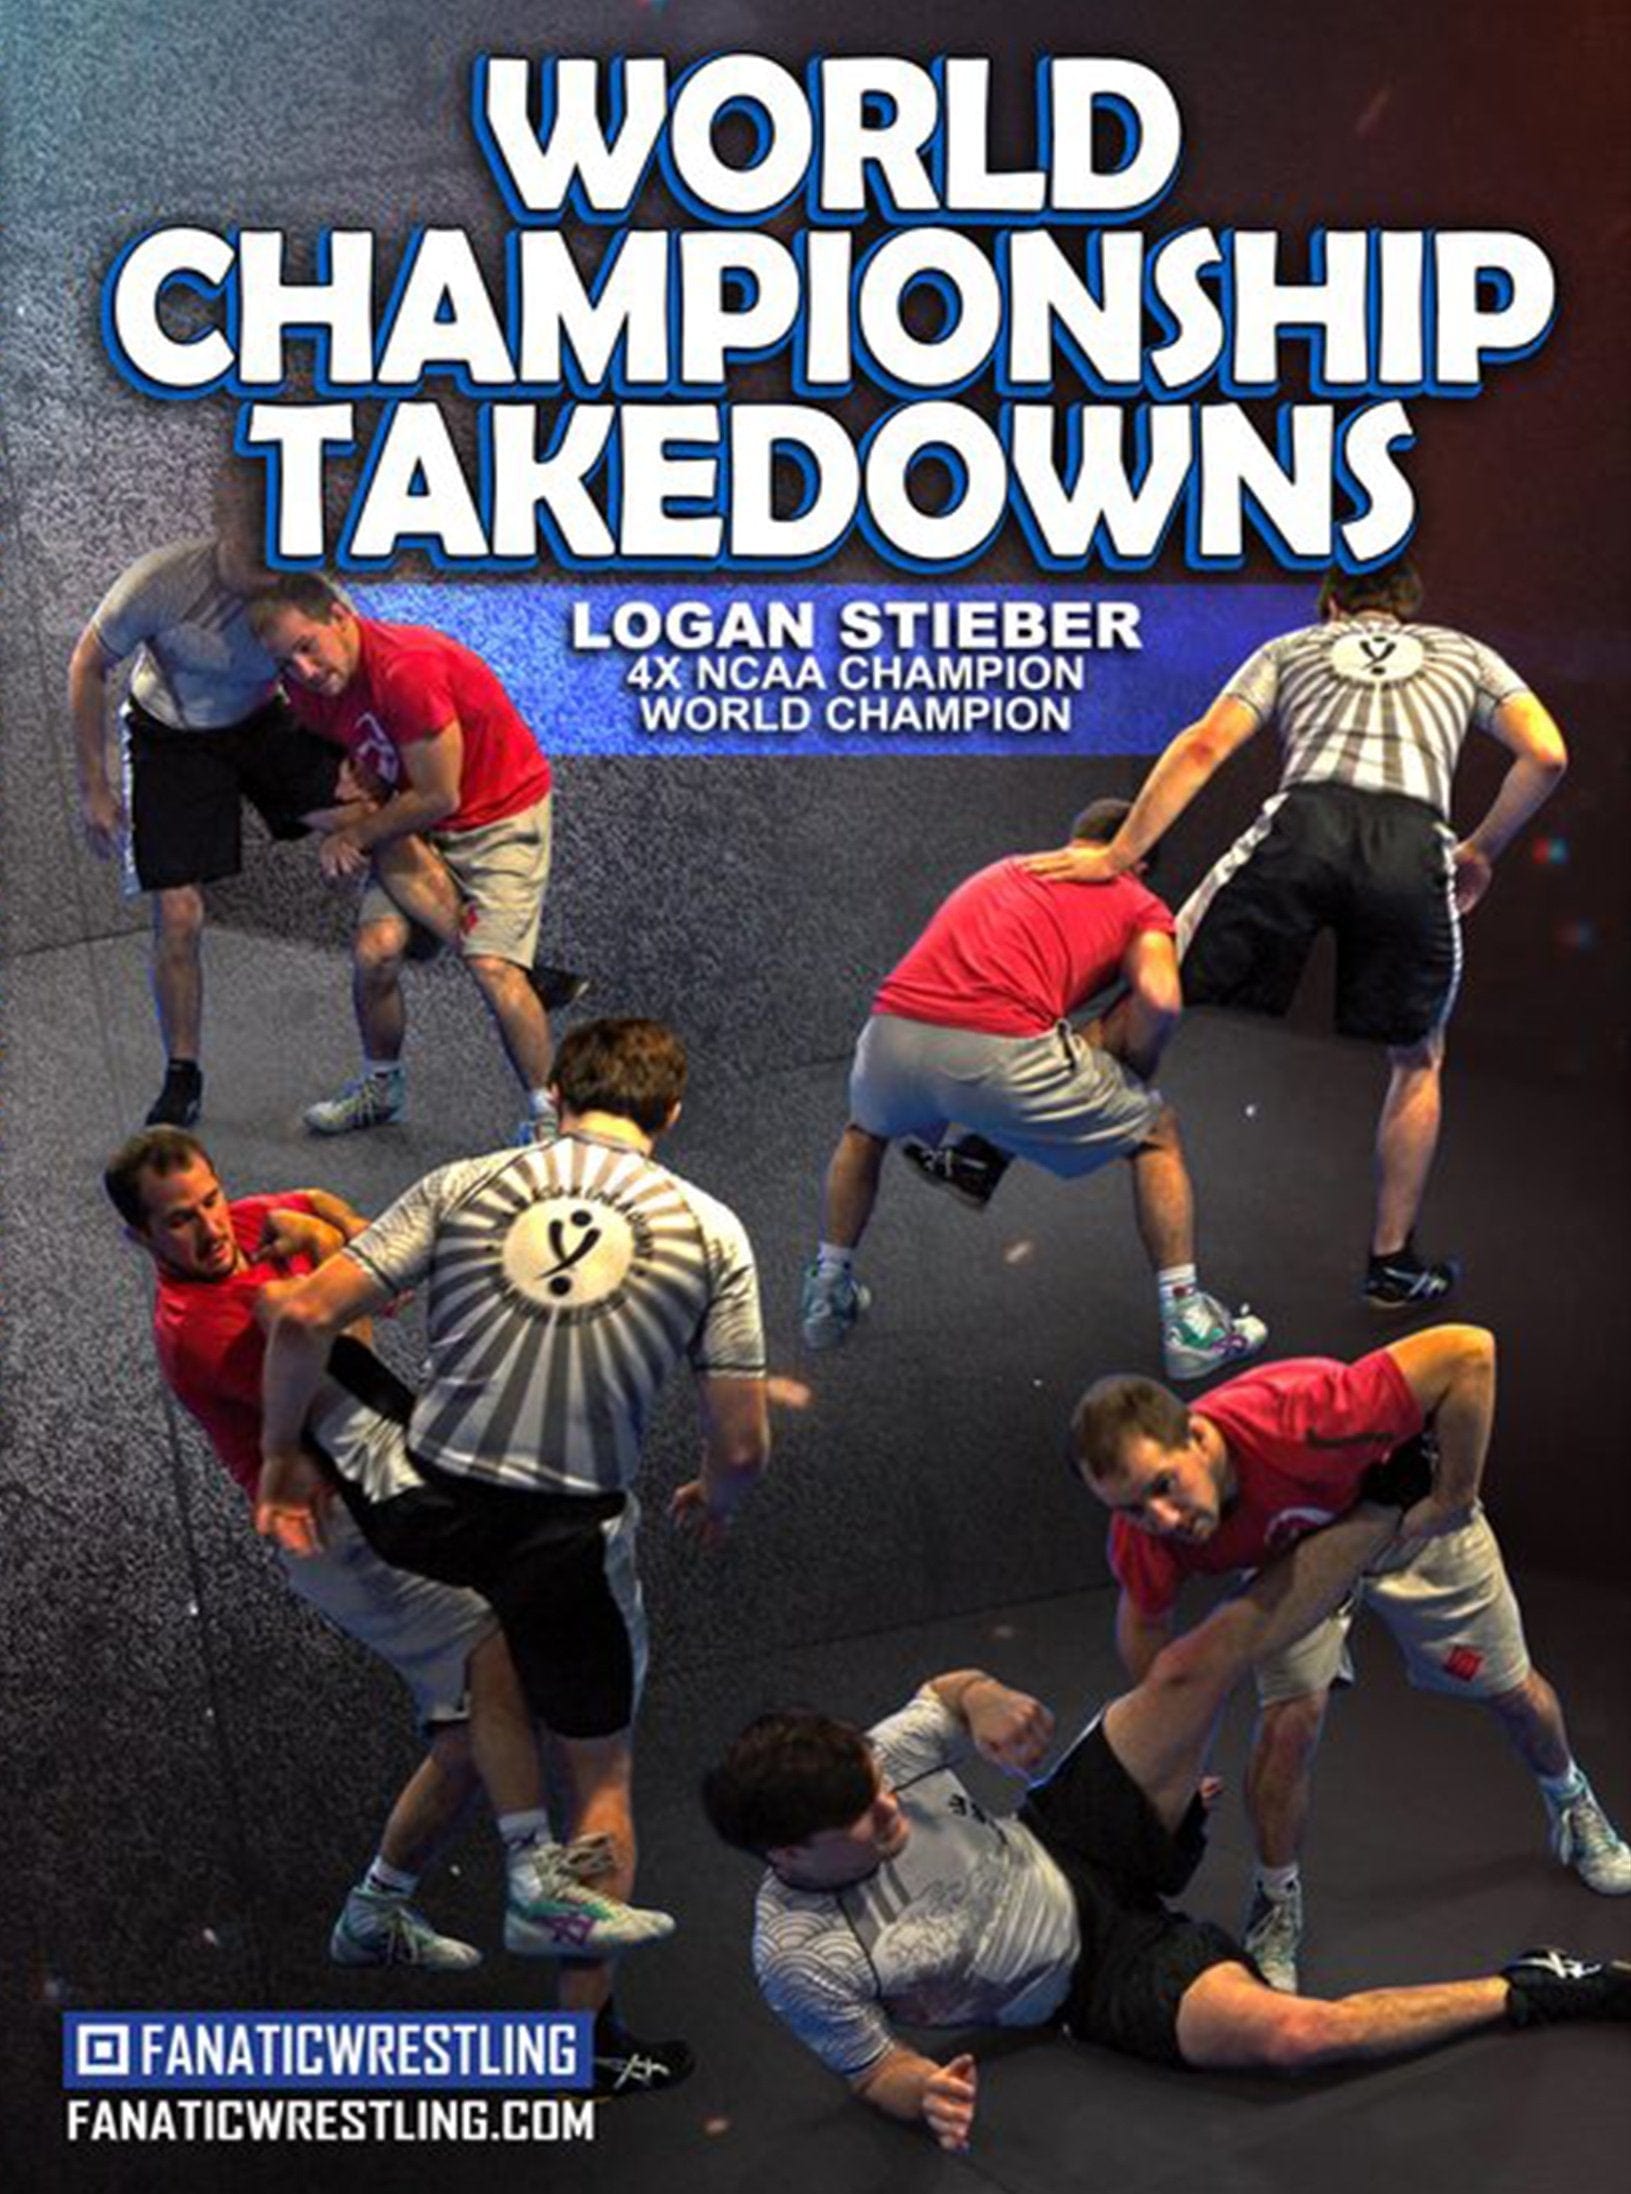 World Championship Takedowns by Logan Stieber - Fanatic Wrestling